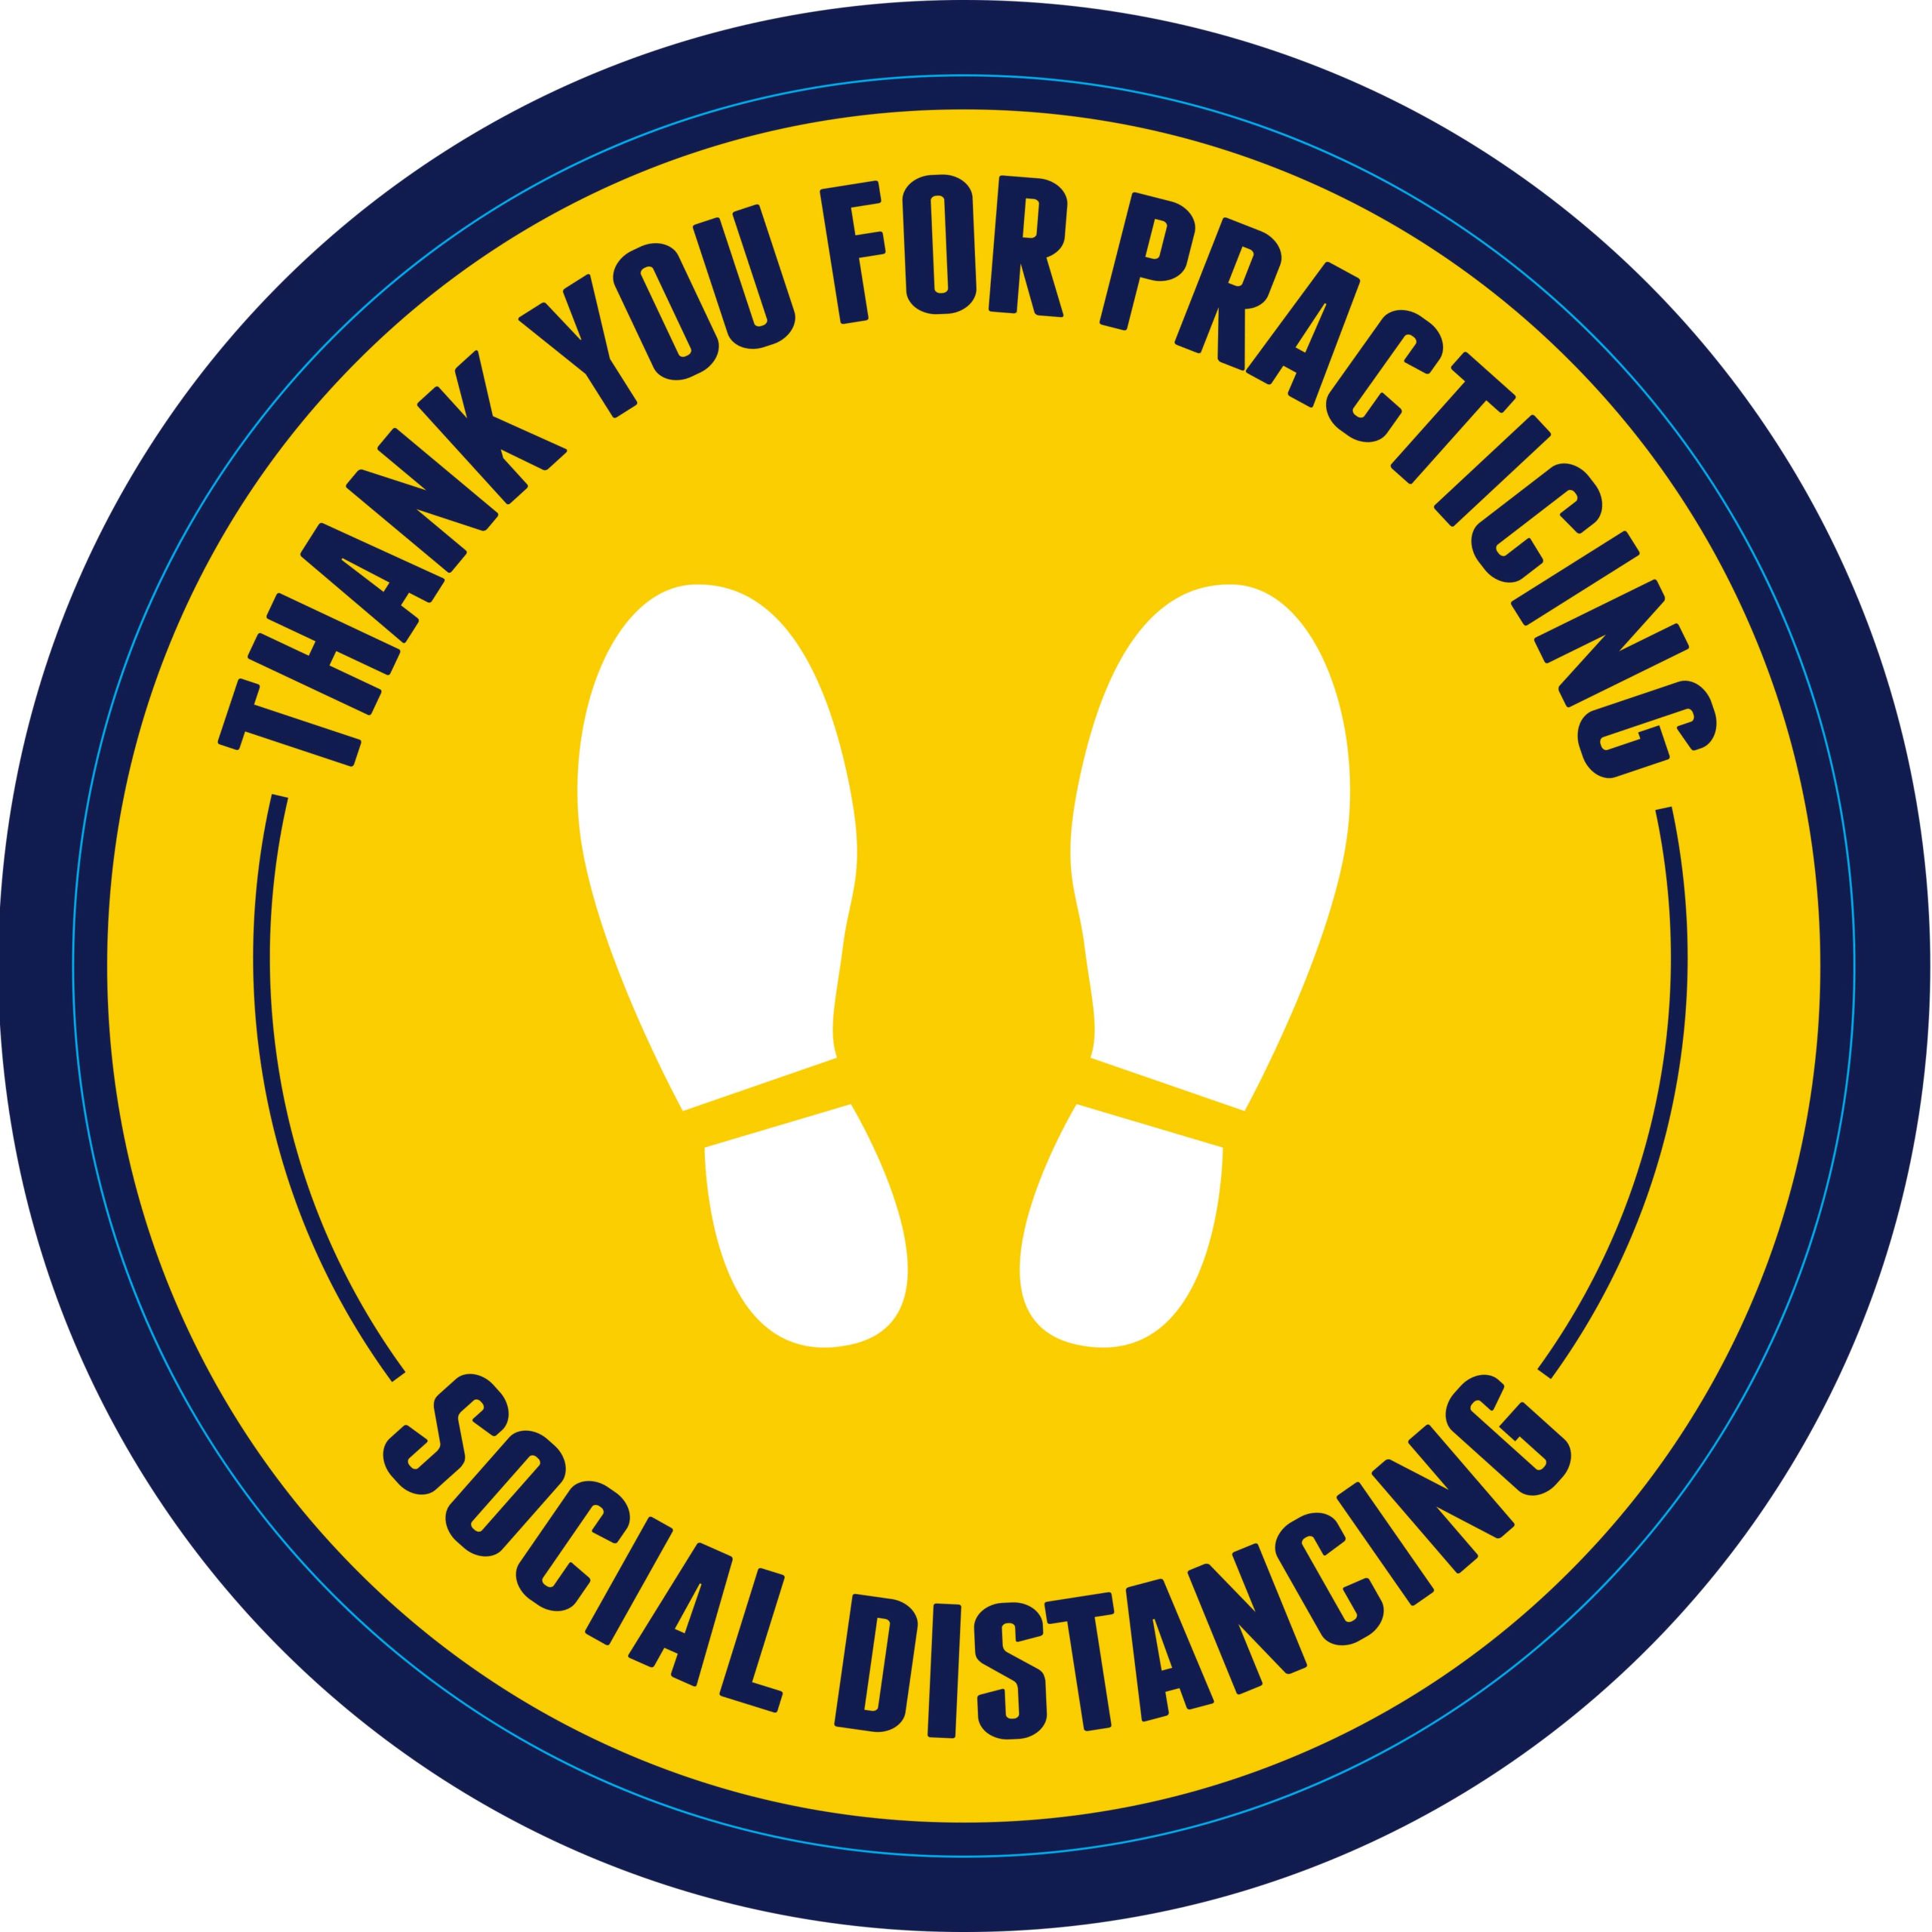 SD - Social Distancing Floor 18" Diameter - YELLOW - 4 pack